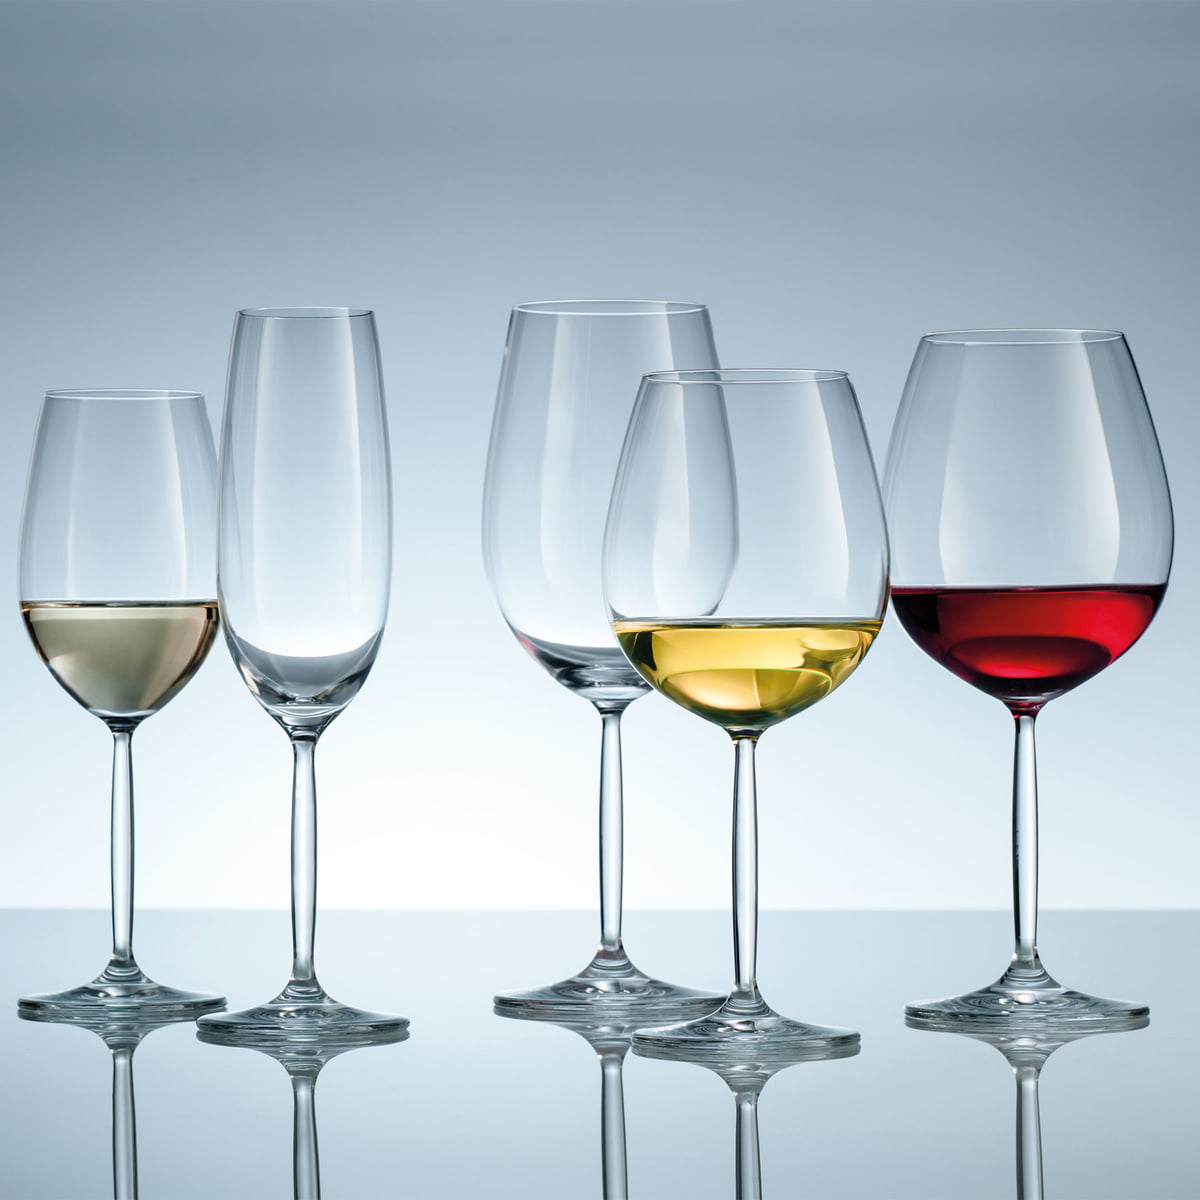 Schott Zwiesel - Diva Wine Glass, water / red wine (set of 2)